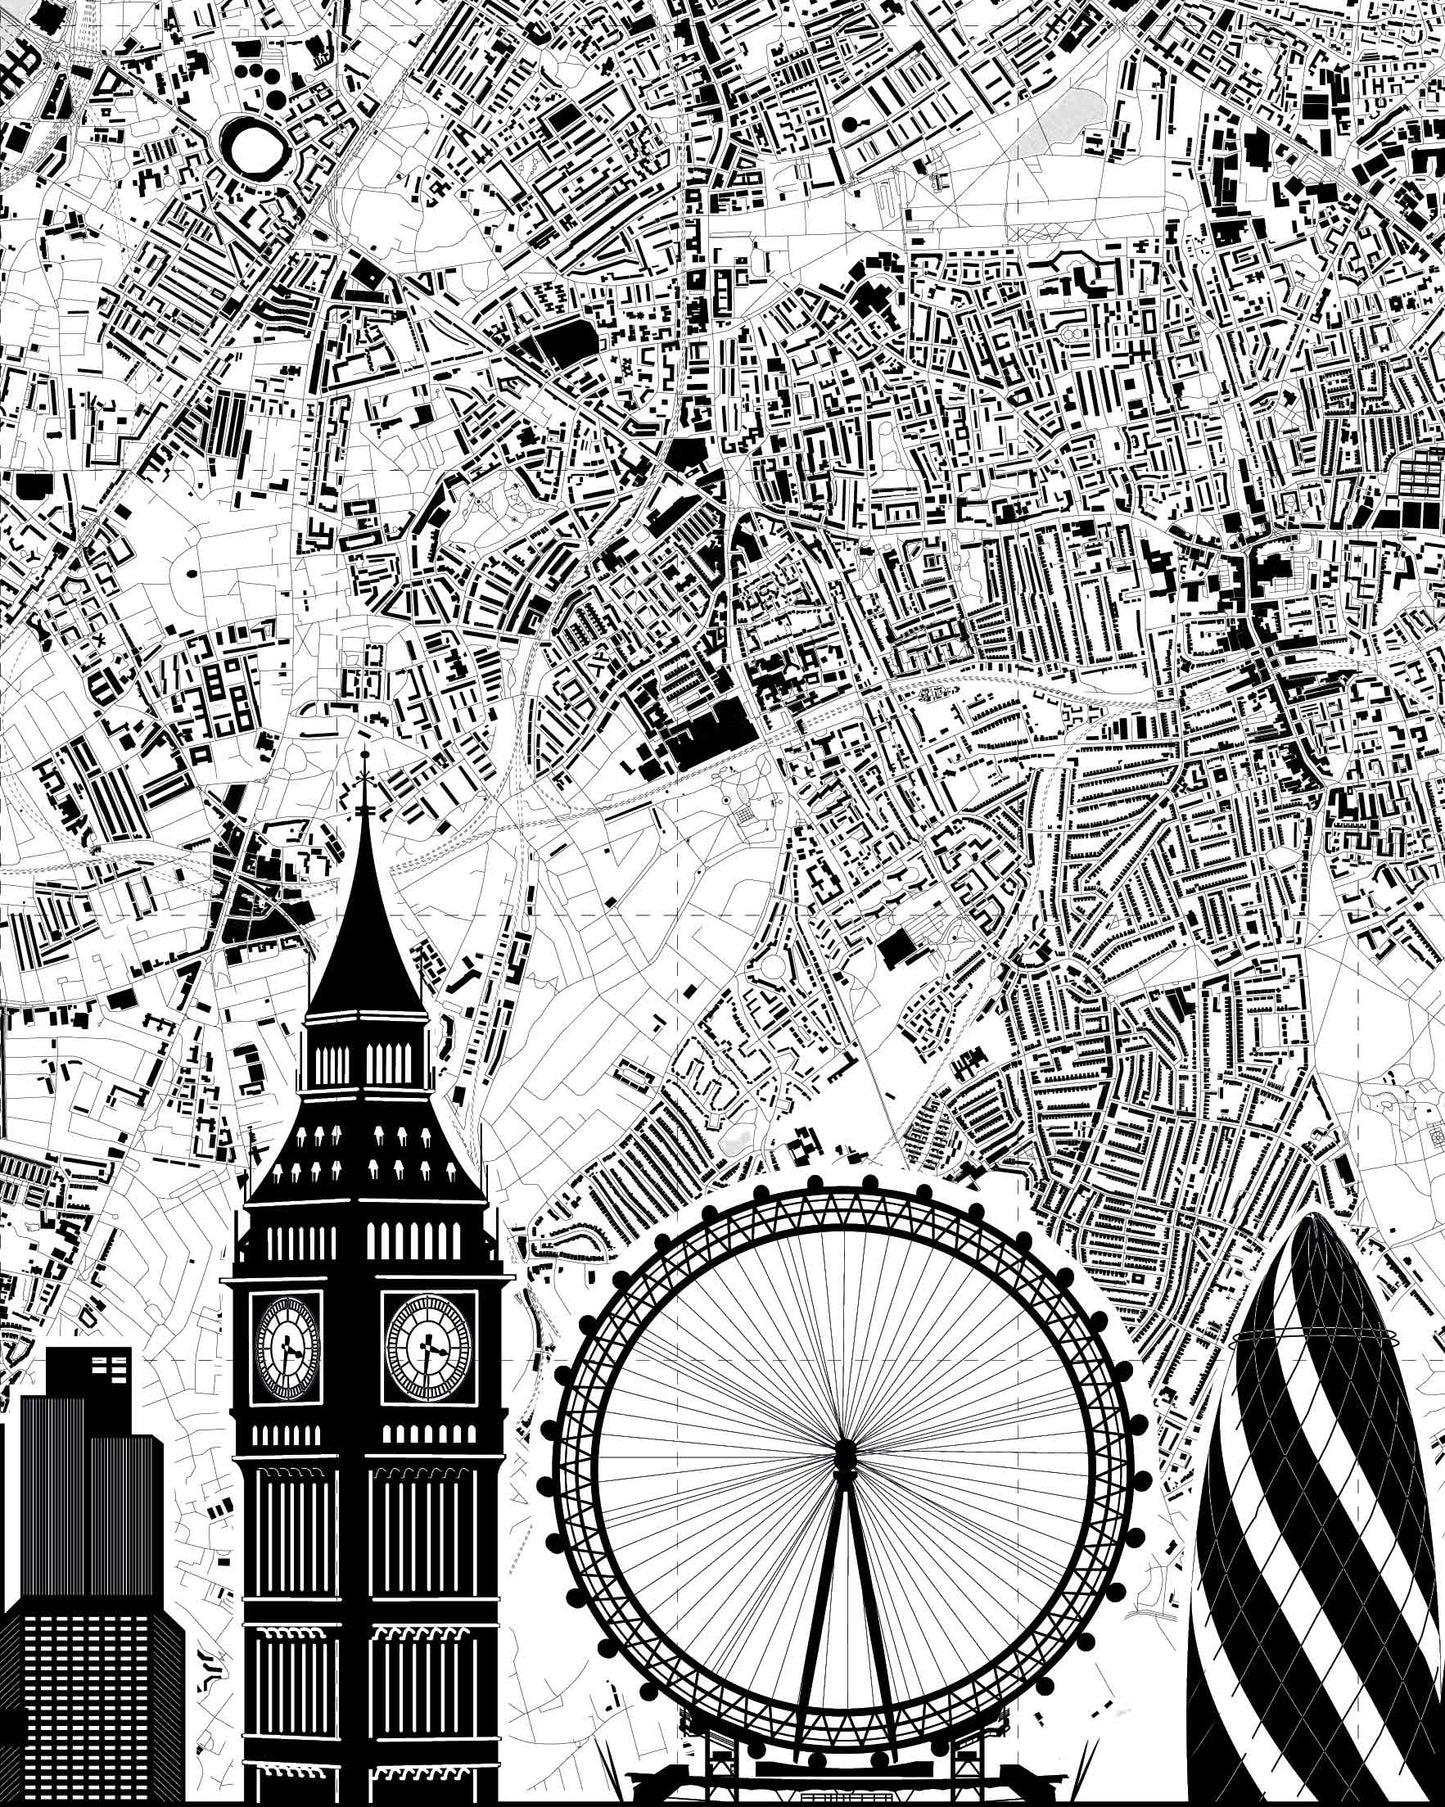 THE CITY: LONDON